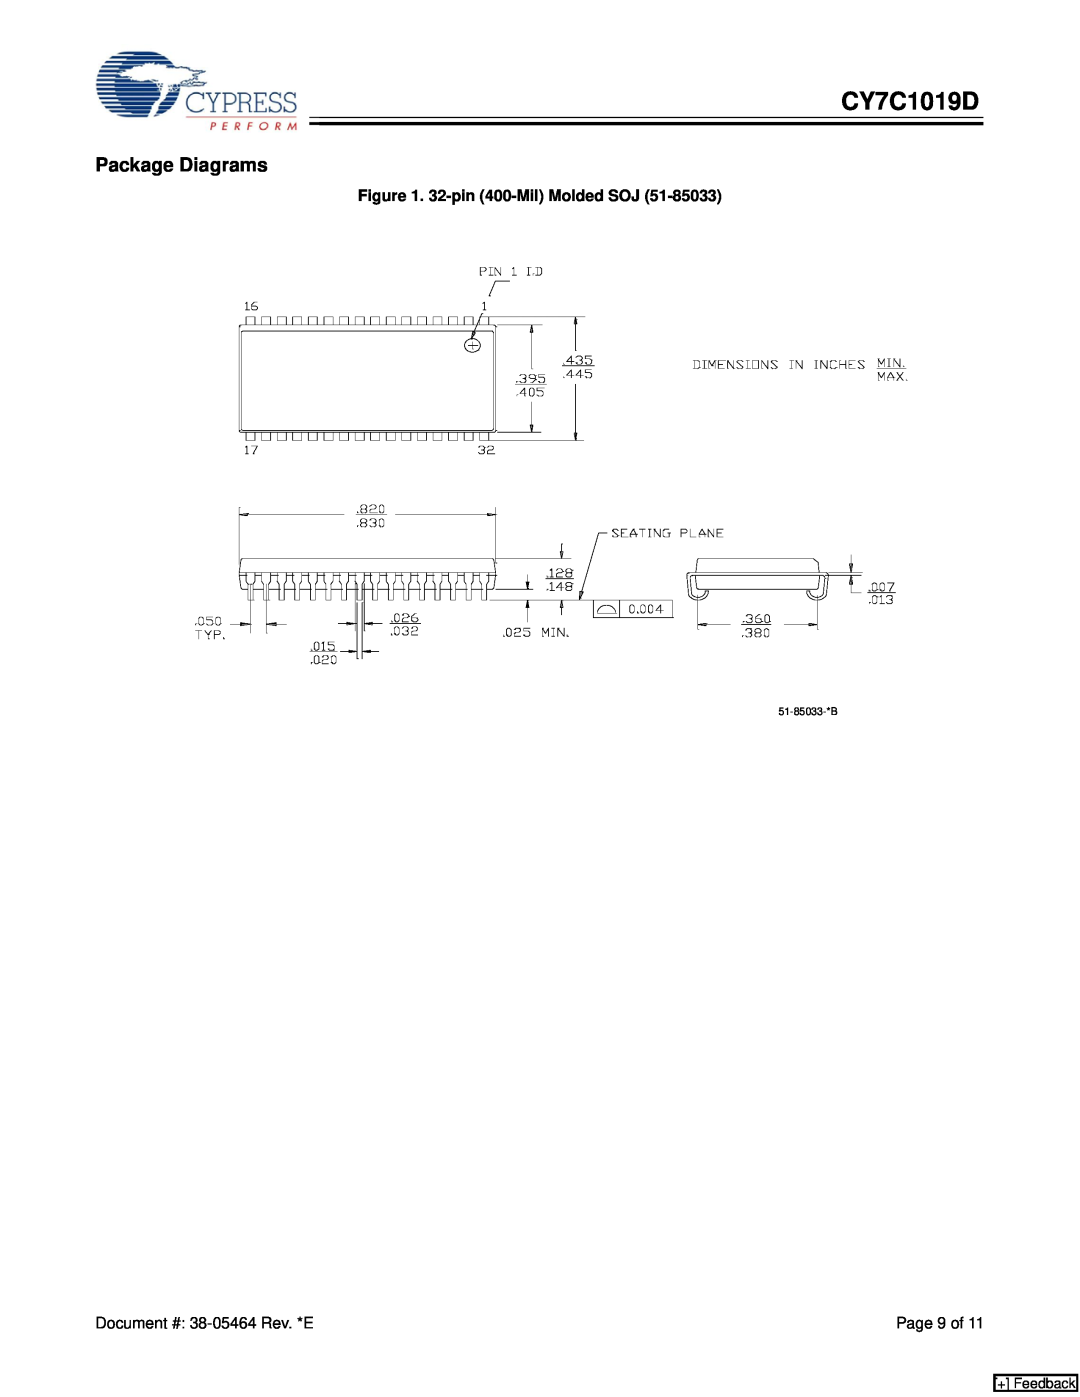 Cypress CY7C1019D manual Package Diagrams, 32-pin 400-Mil Molded SOJ, + Feedback 